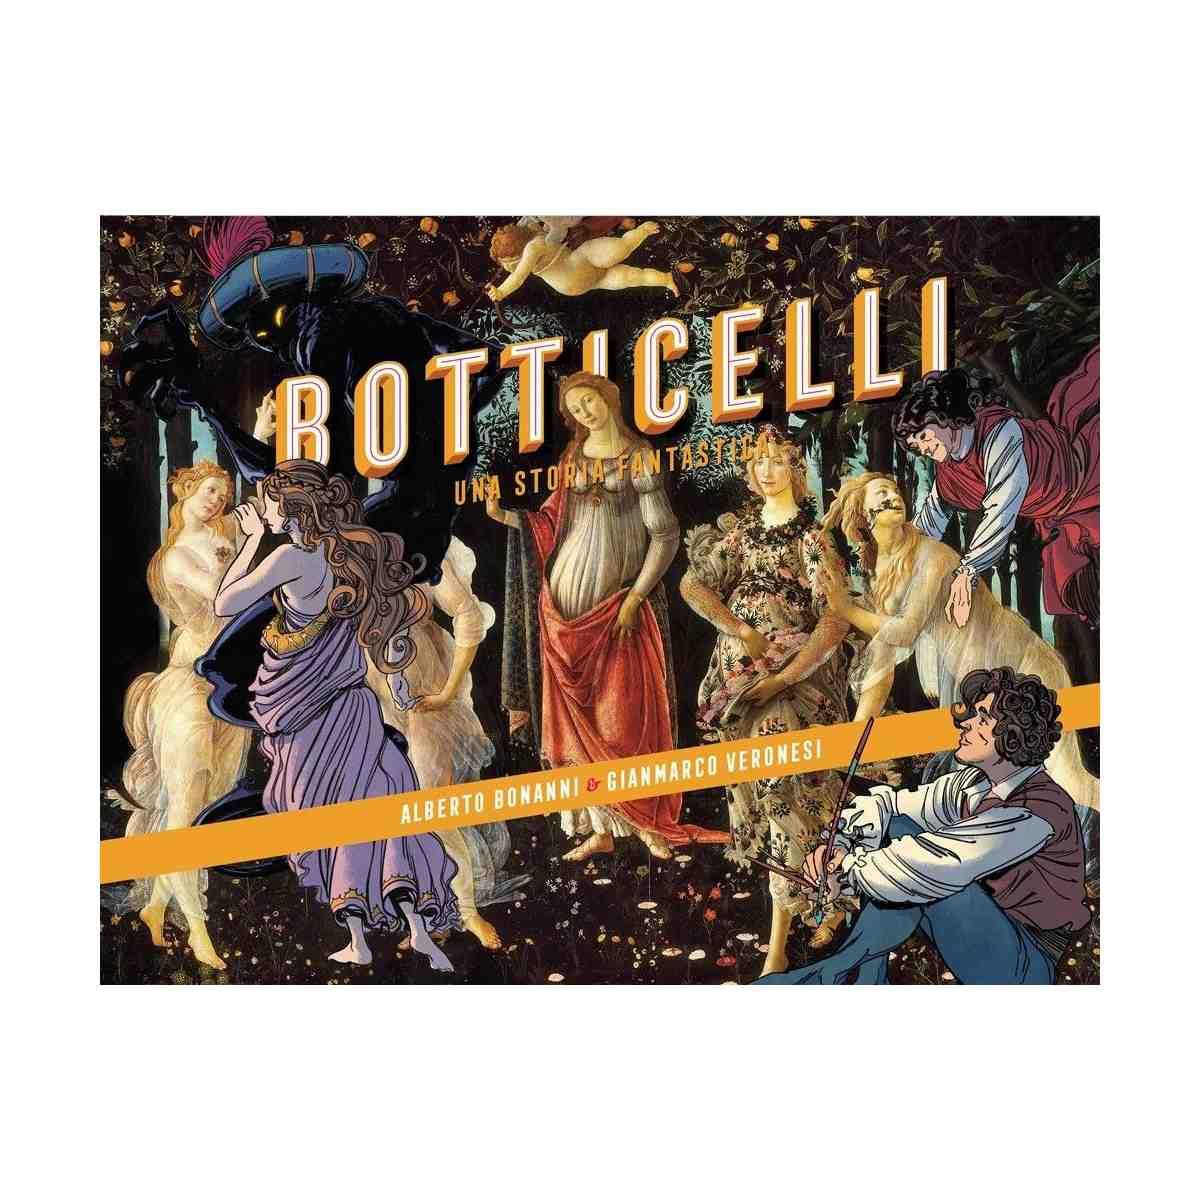 Botticelli una storia fantastica